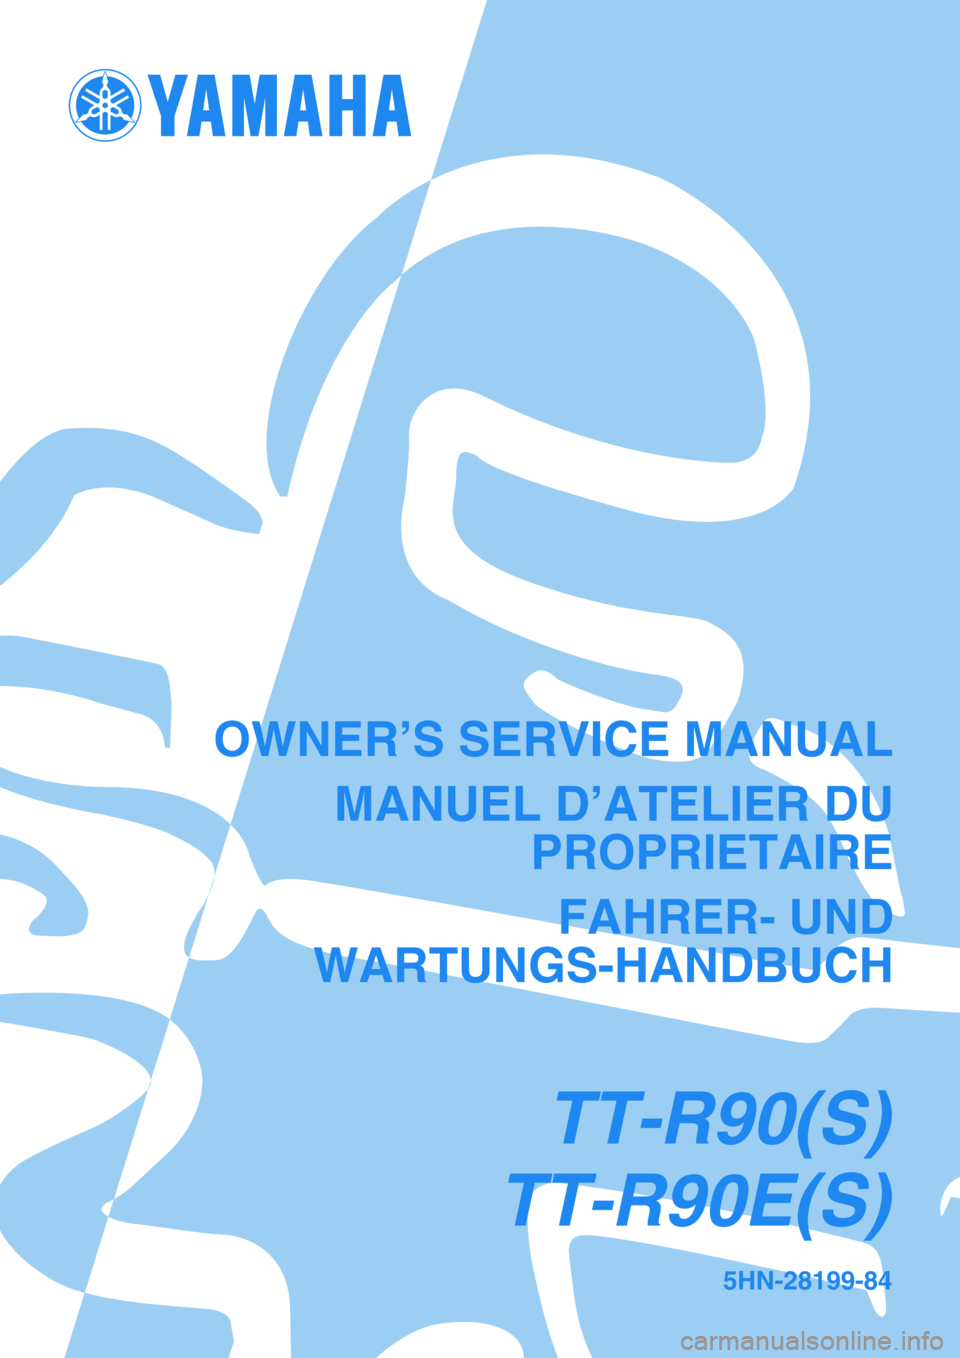 YAMAHA TTR90 2004  Notices Demploi (in French) 5HN-28199-84
TT-R90(S)
TT-R90E(S)
OWNER’S SERVICE MANUAL
MANUEL D’ATELIER DU
PROPRIETAIRE
FAHRER- UND
WARTUNGS-HANDBUCH 